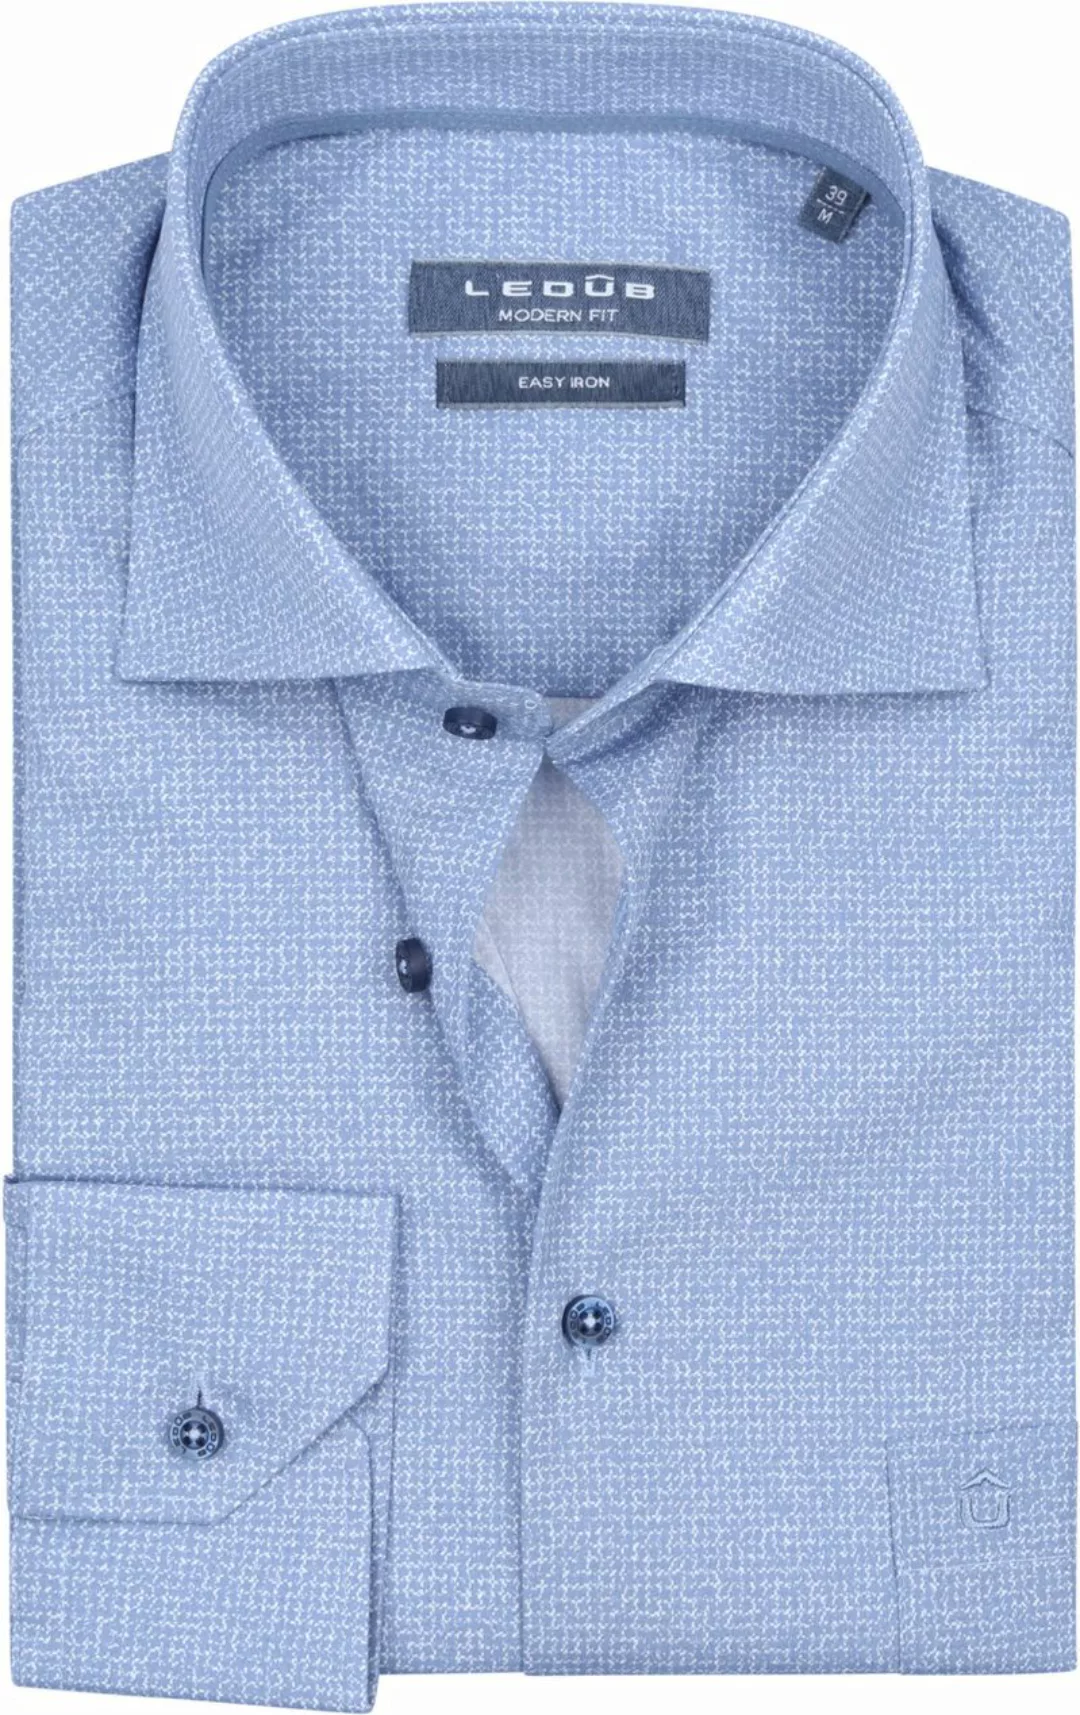 Ledub Shirt Druck Blau - Größe 44 günstig online kaufen